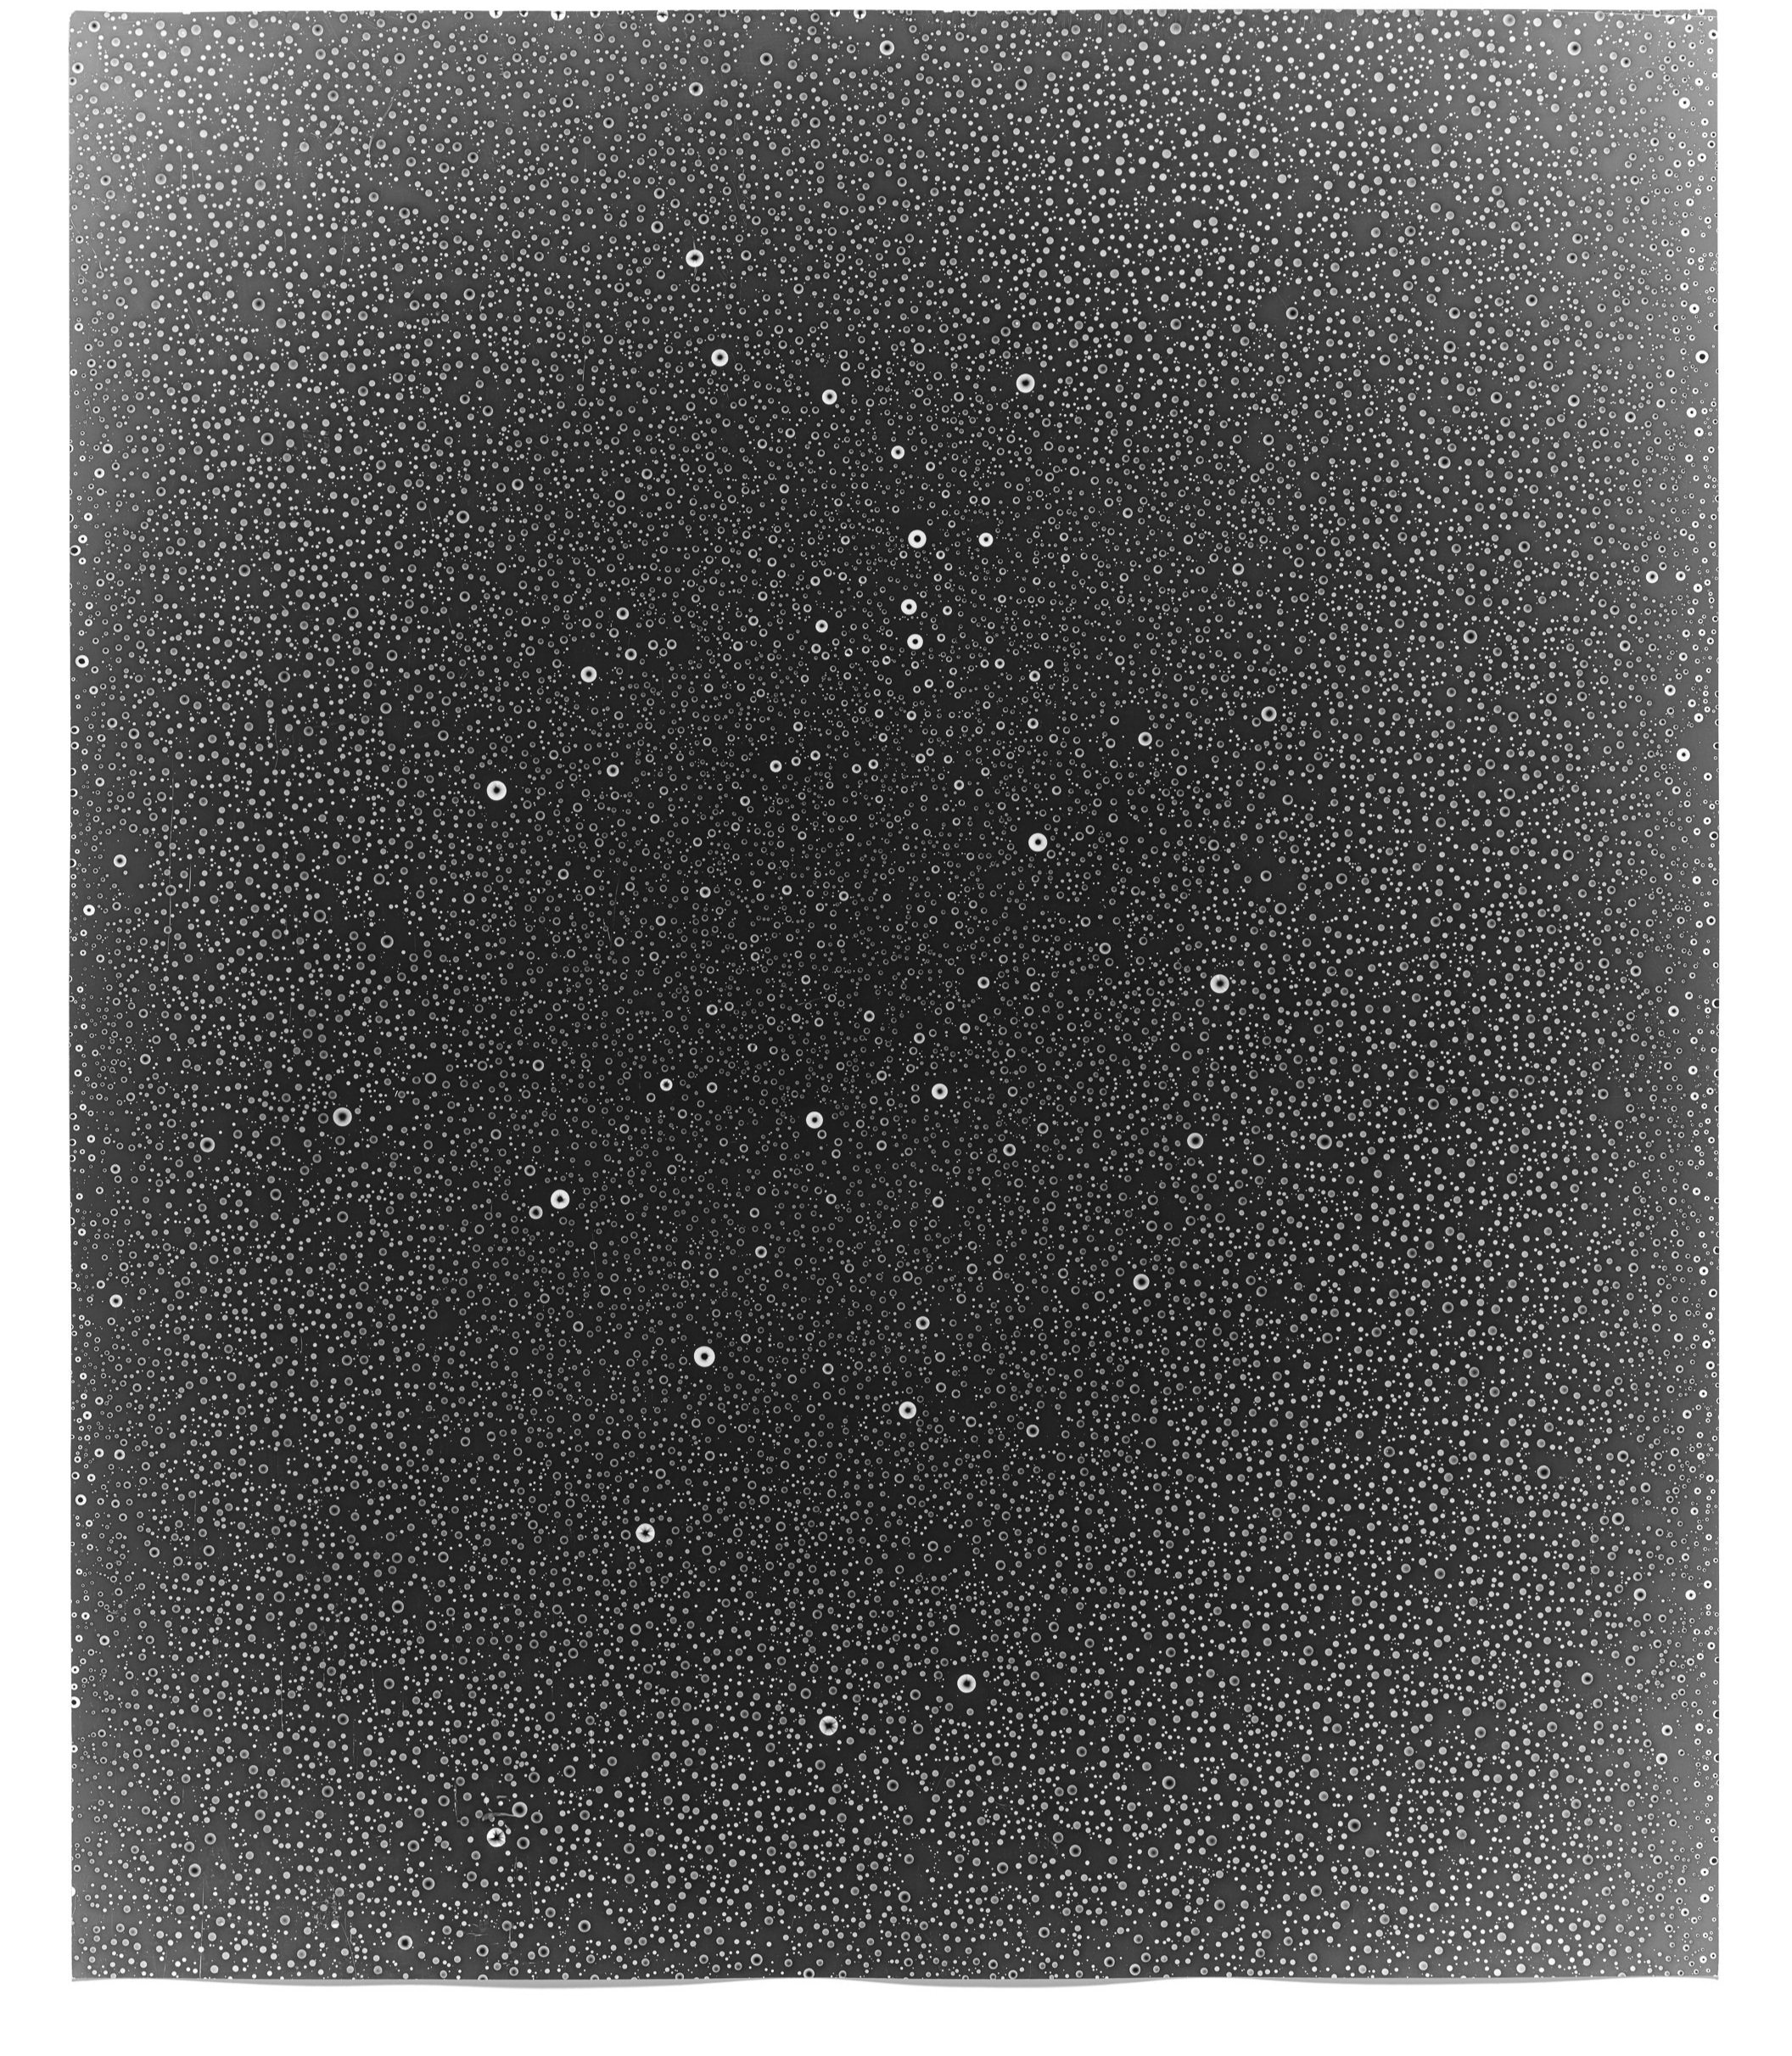   Rain Study (Kona 28),  2014   Silver gelatin photogram 24 x 20 in 